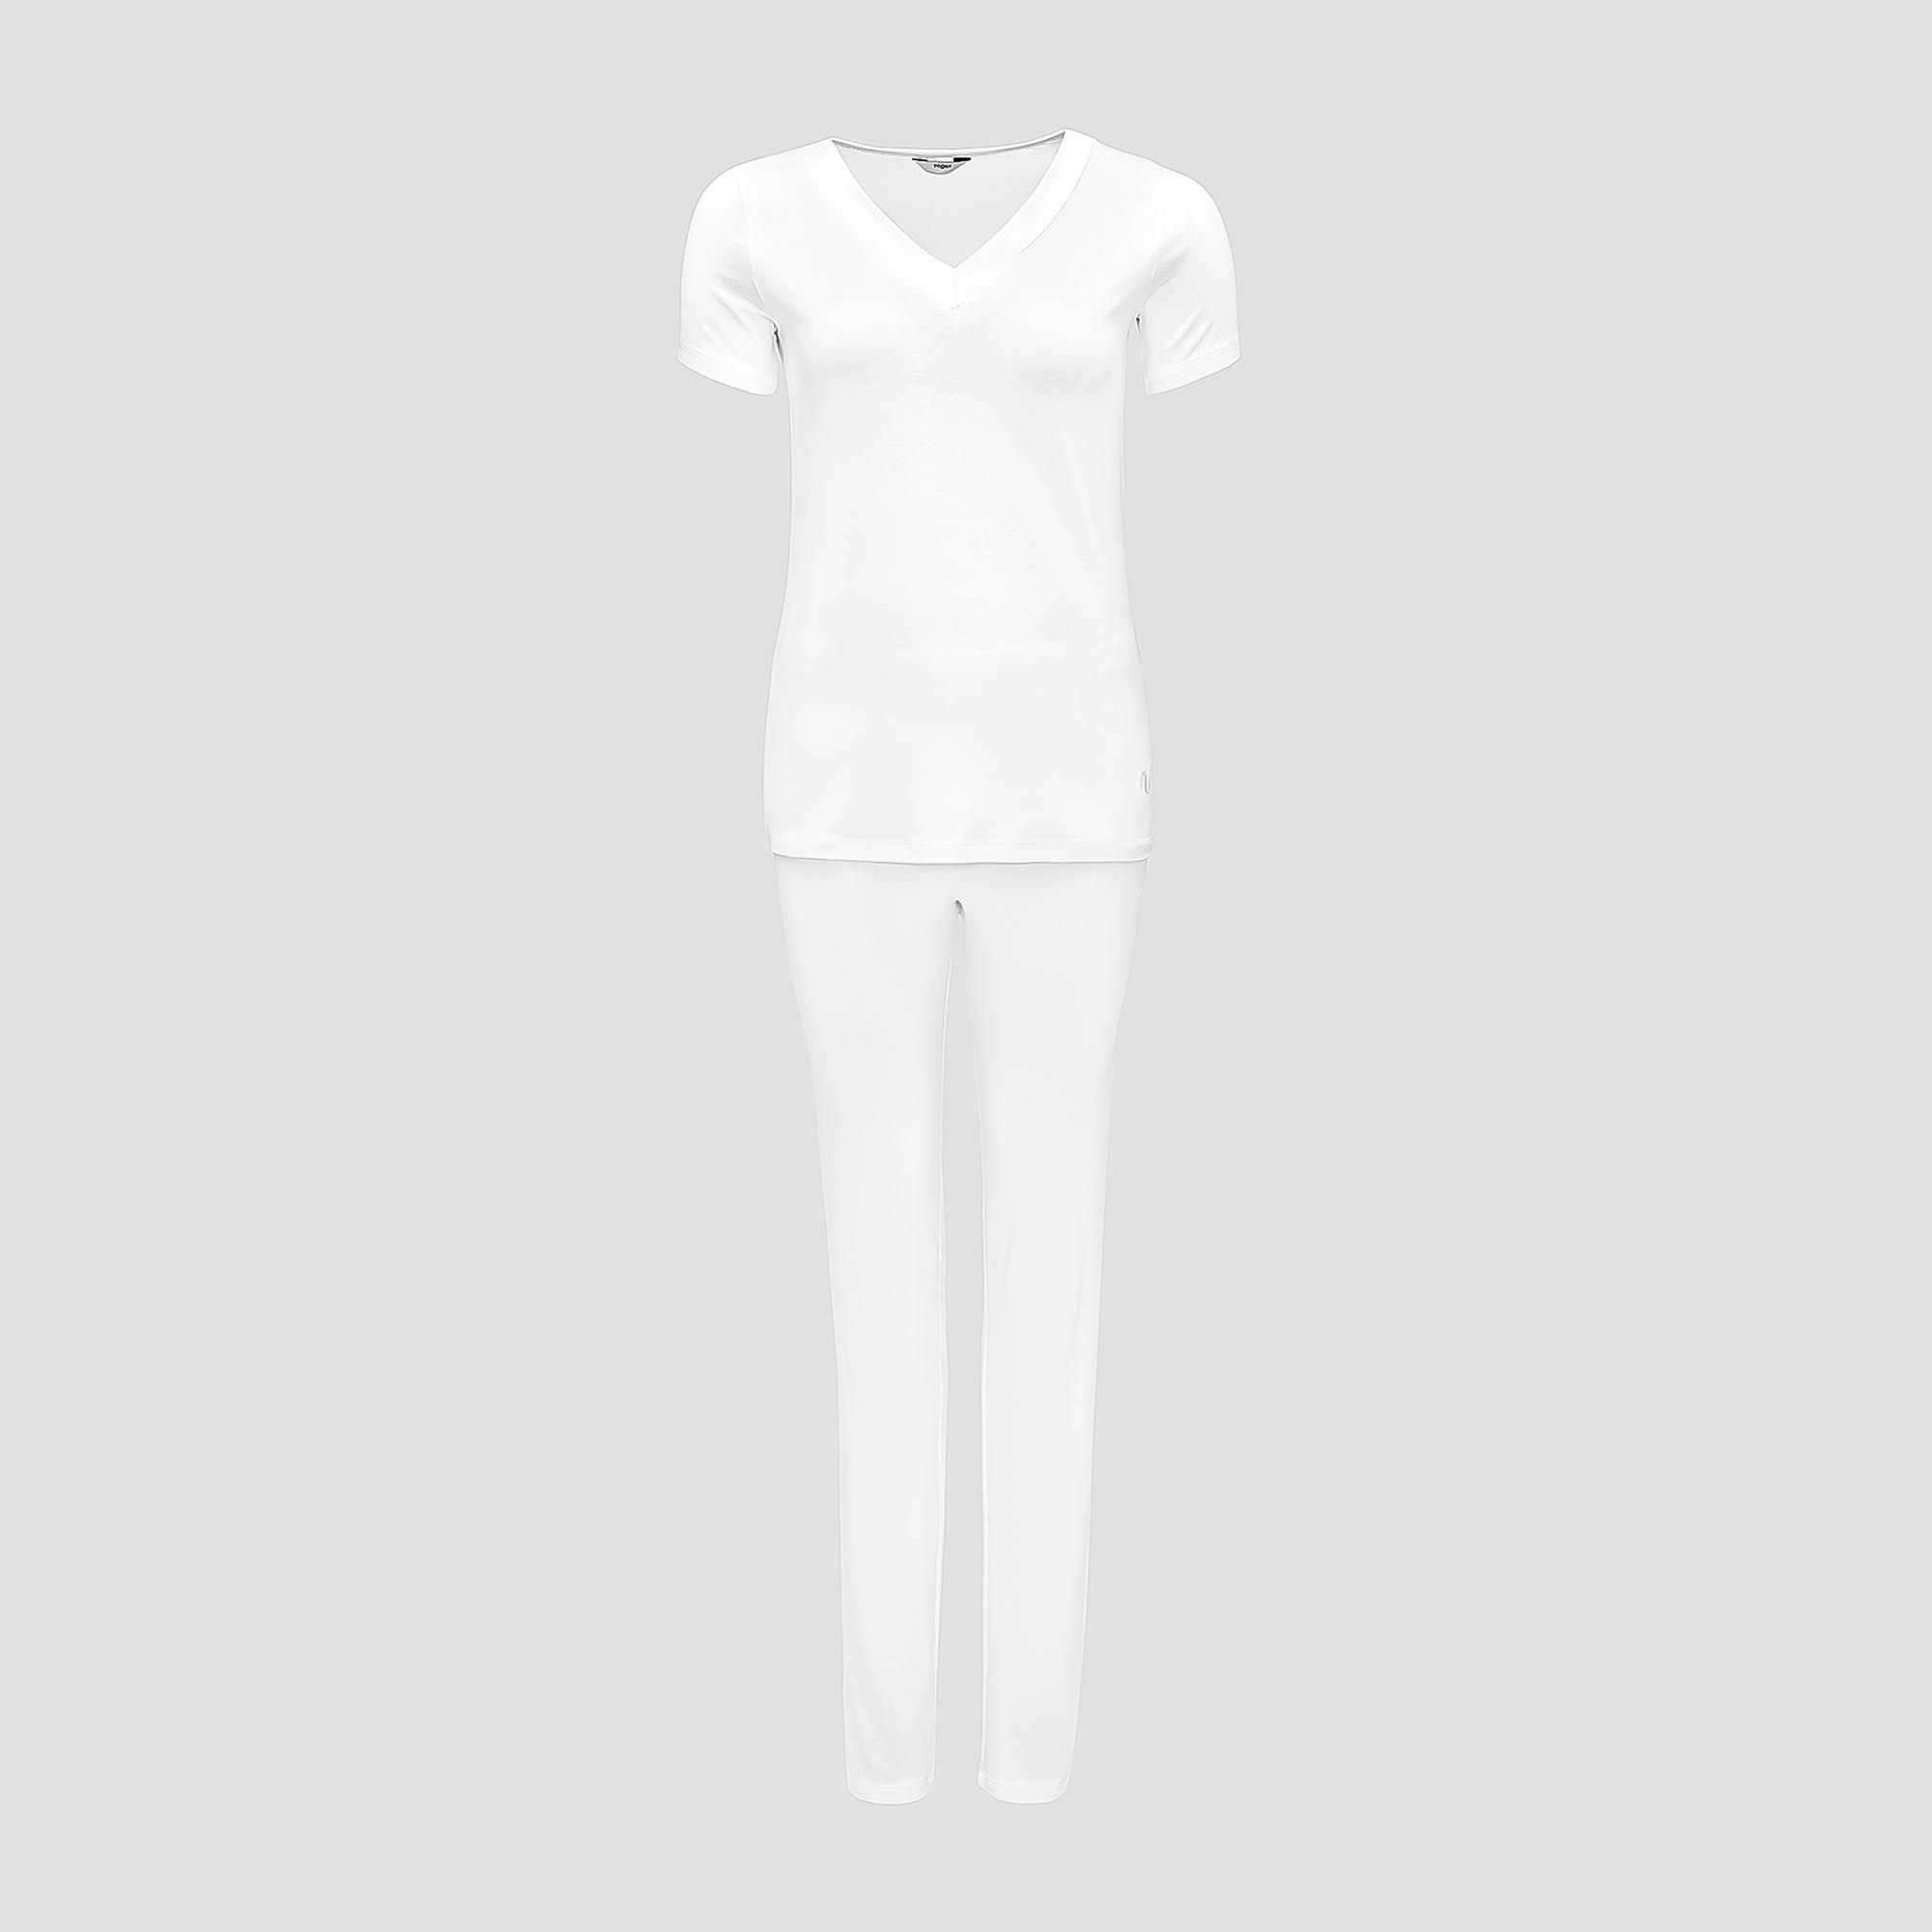 Пижама Togas Ингелла белая женская S(44) 2 предмета пижама футболка брюки